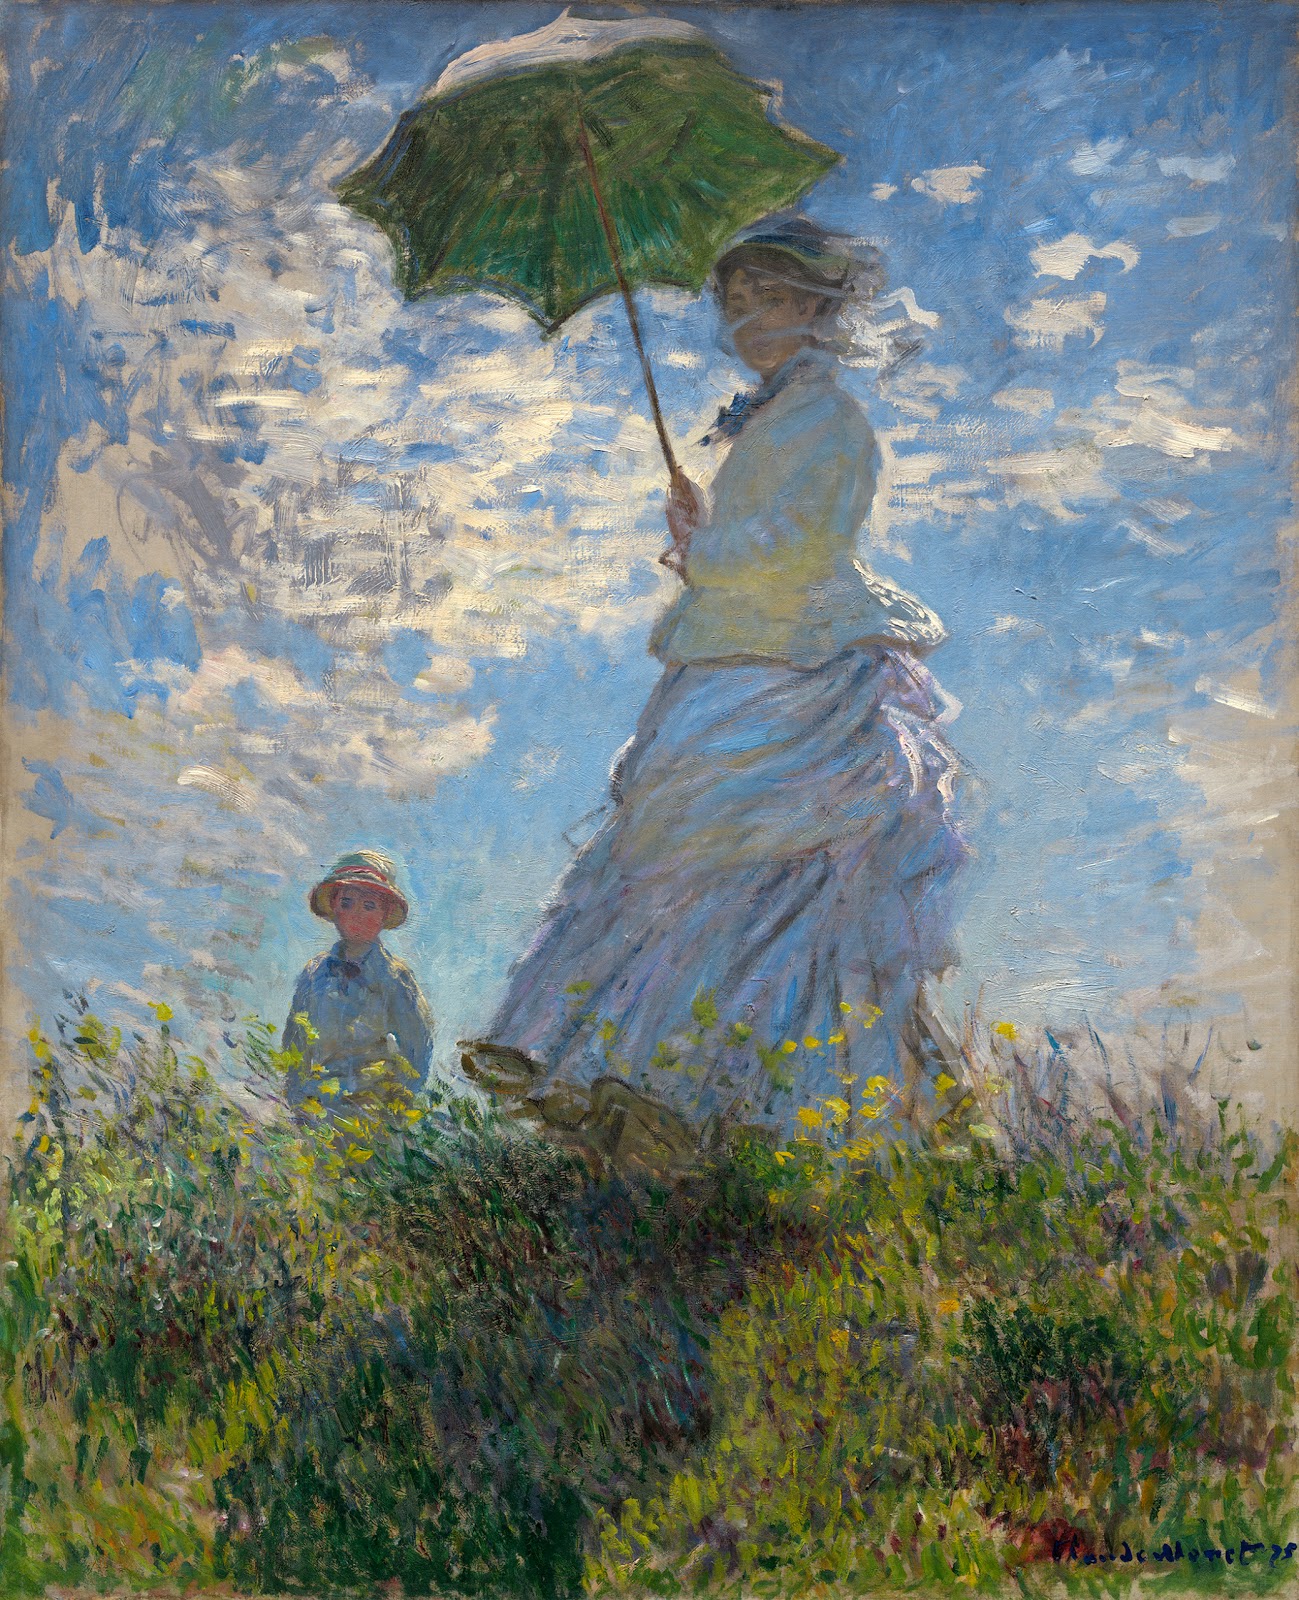 Claude+Monet-1840-1926 (790).jpg